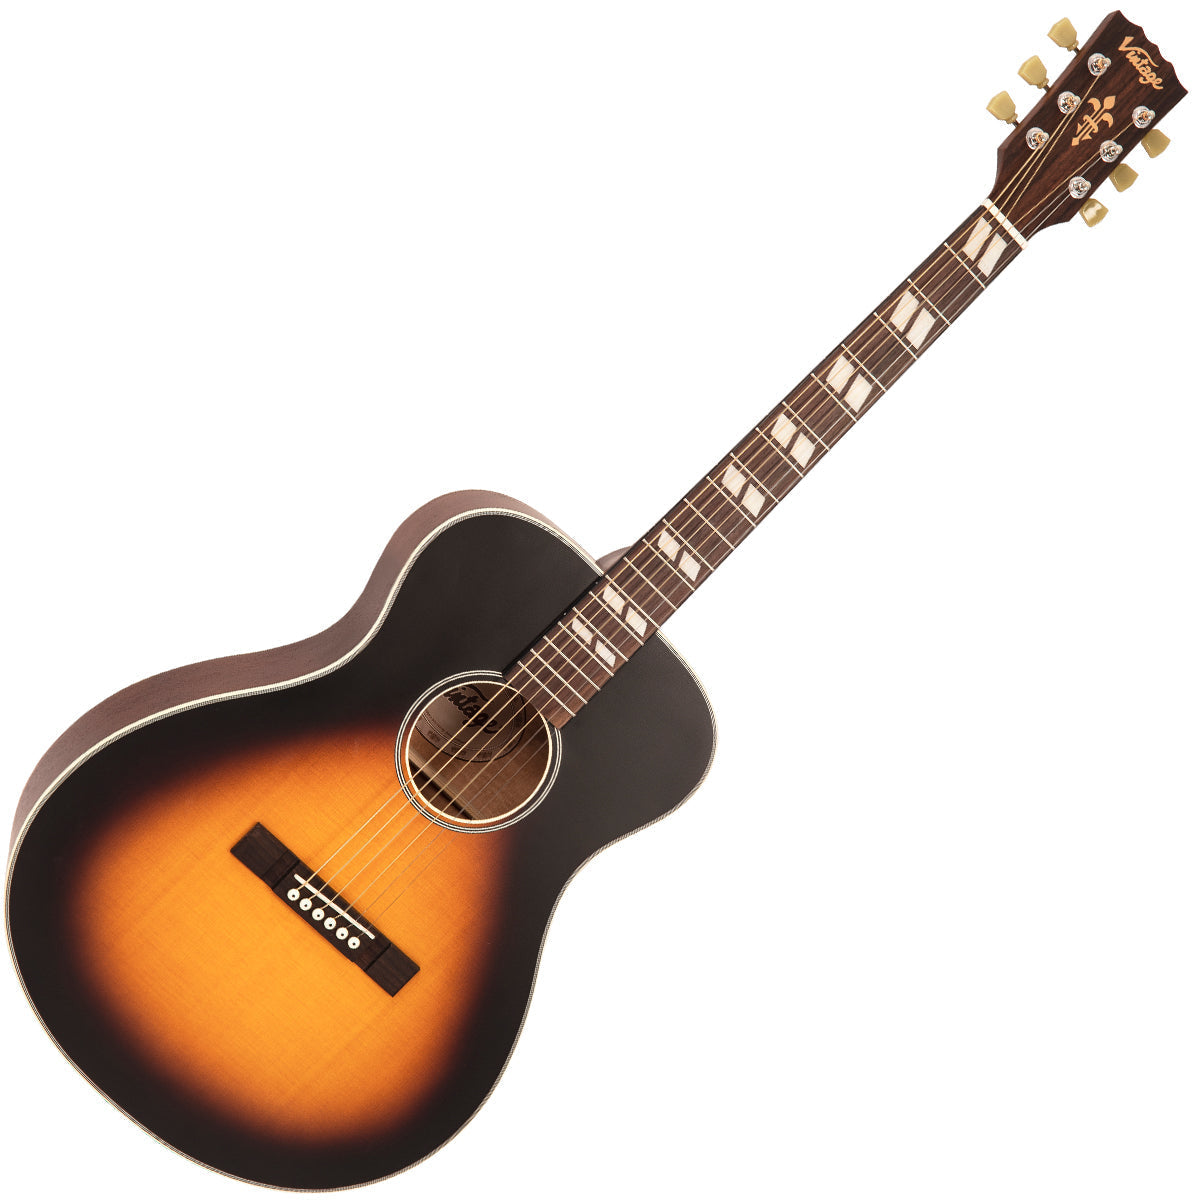 Vintage Historic Series 'Folk' Acoustic Guitar ~ Vintage Sunburst, Acoustic Guitars for sale at Richards Guitars.